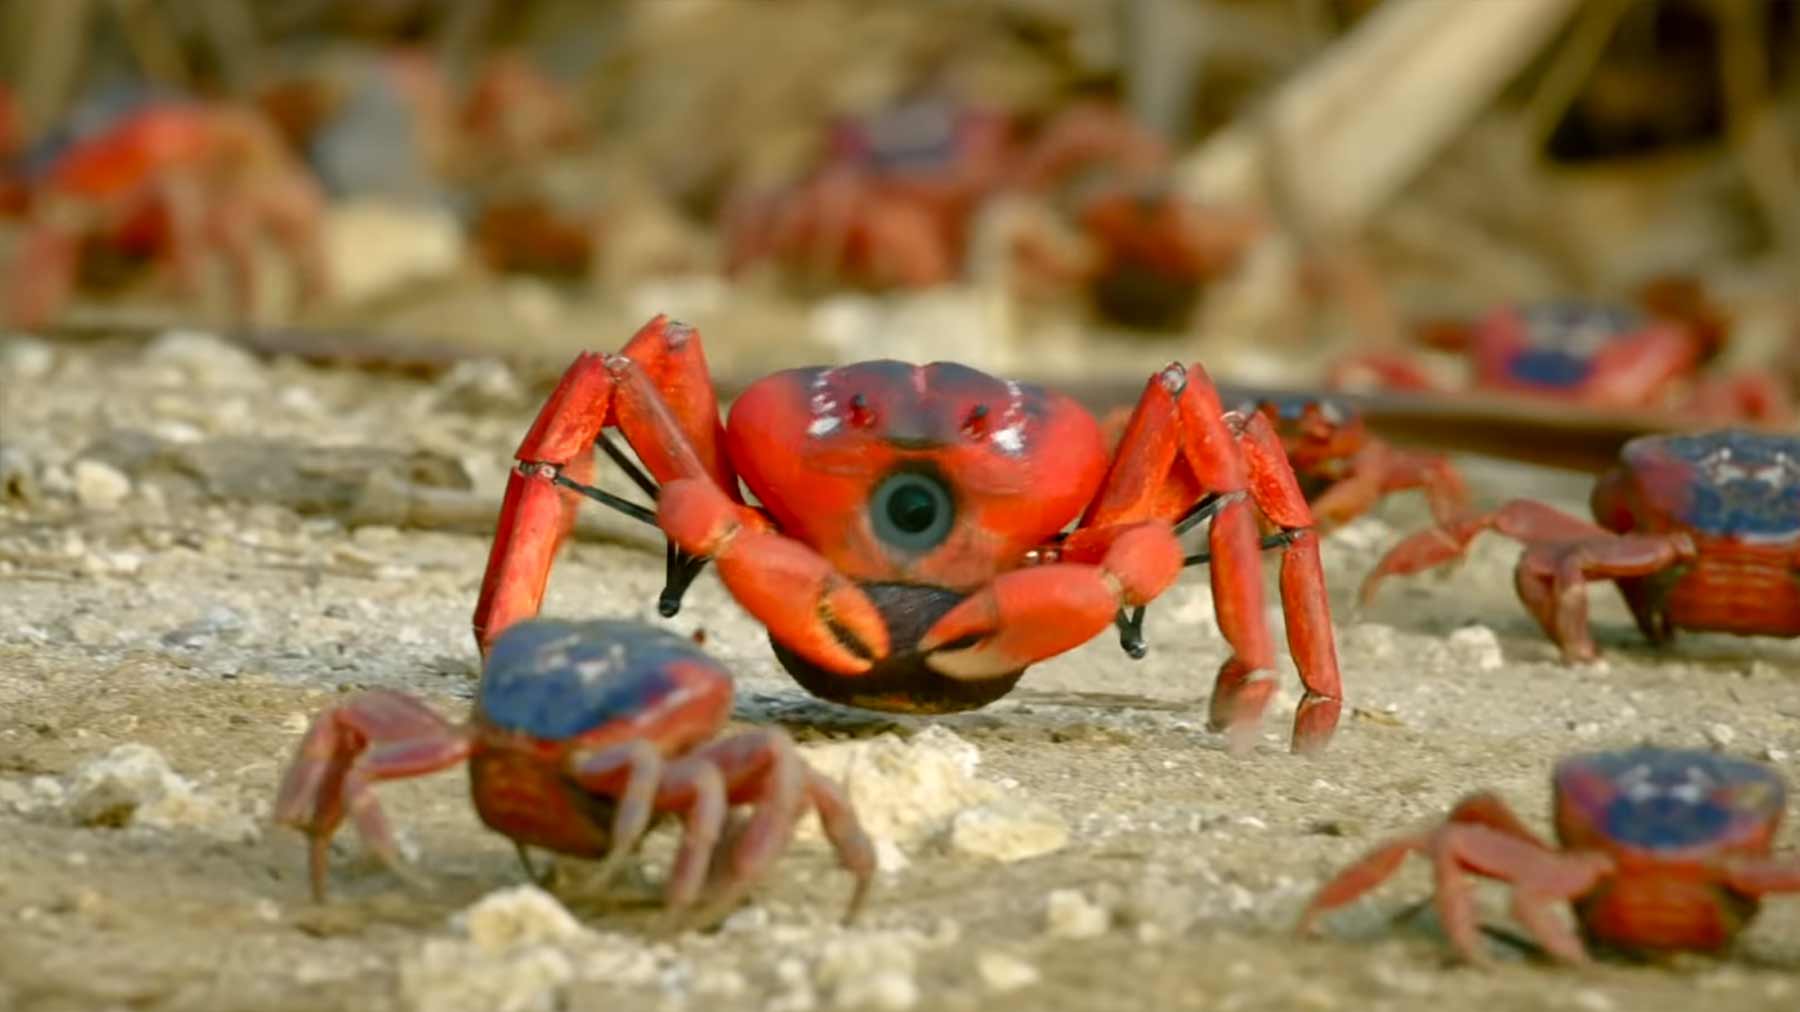 Roboter-Krabbe filmt echte Krabben roboter-krabbe-filmt-unter-echten-krabben 